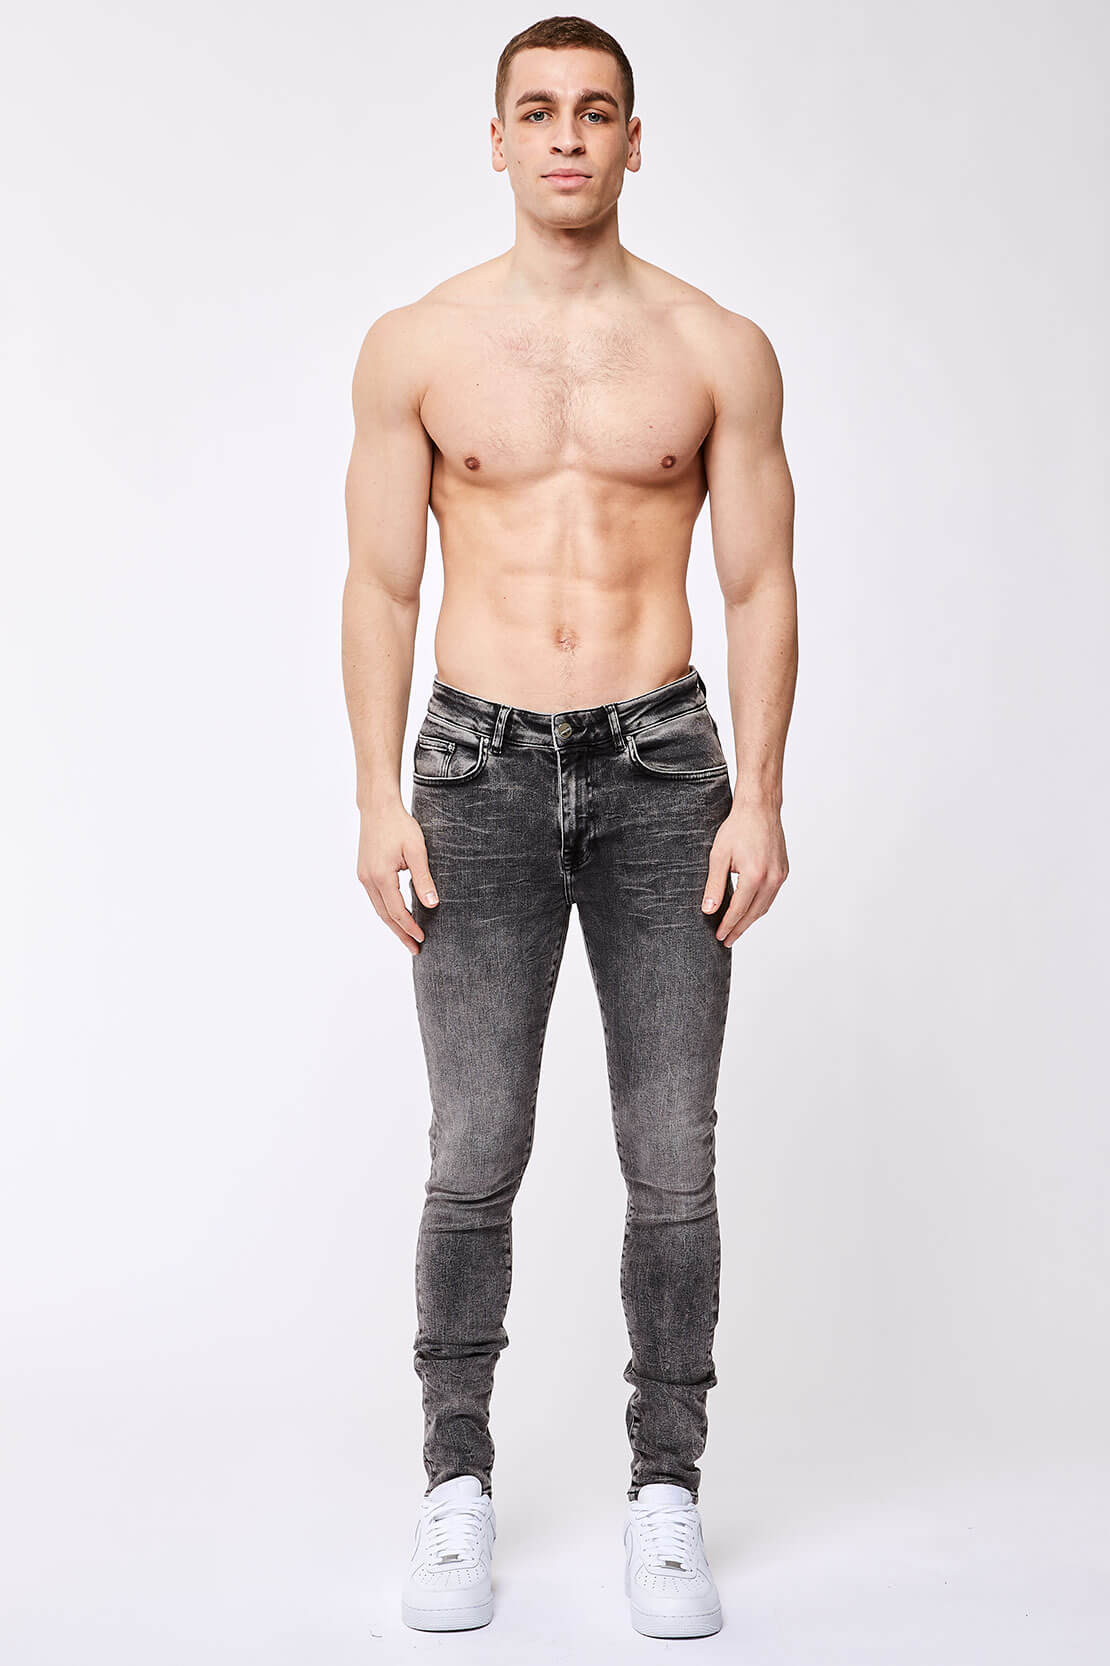 Legend London Jeans SKINNY FIT JEANS - ACID GREY WASH